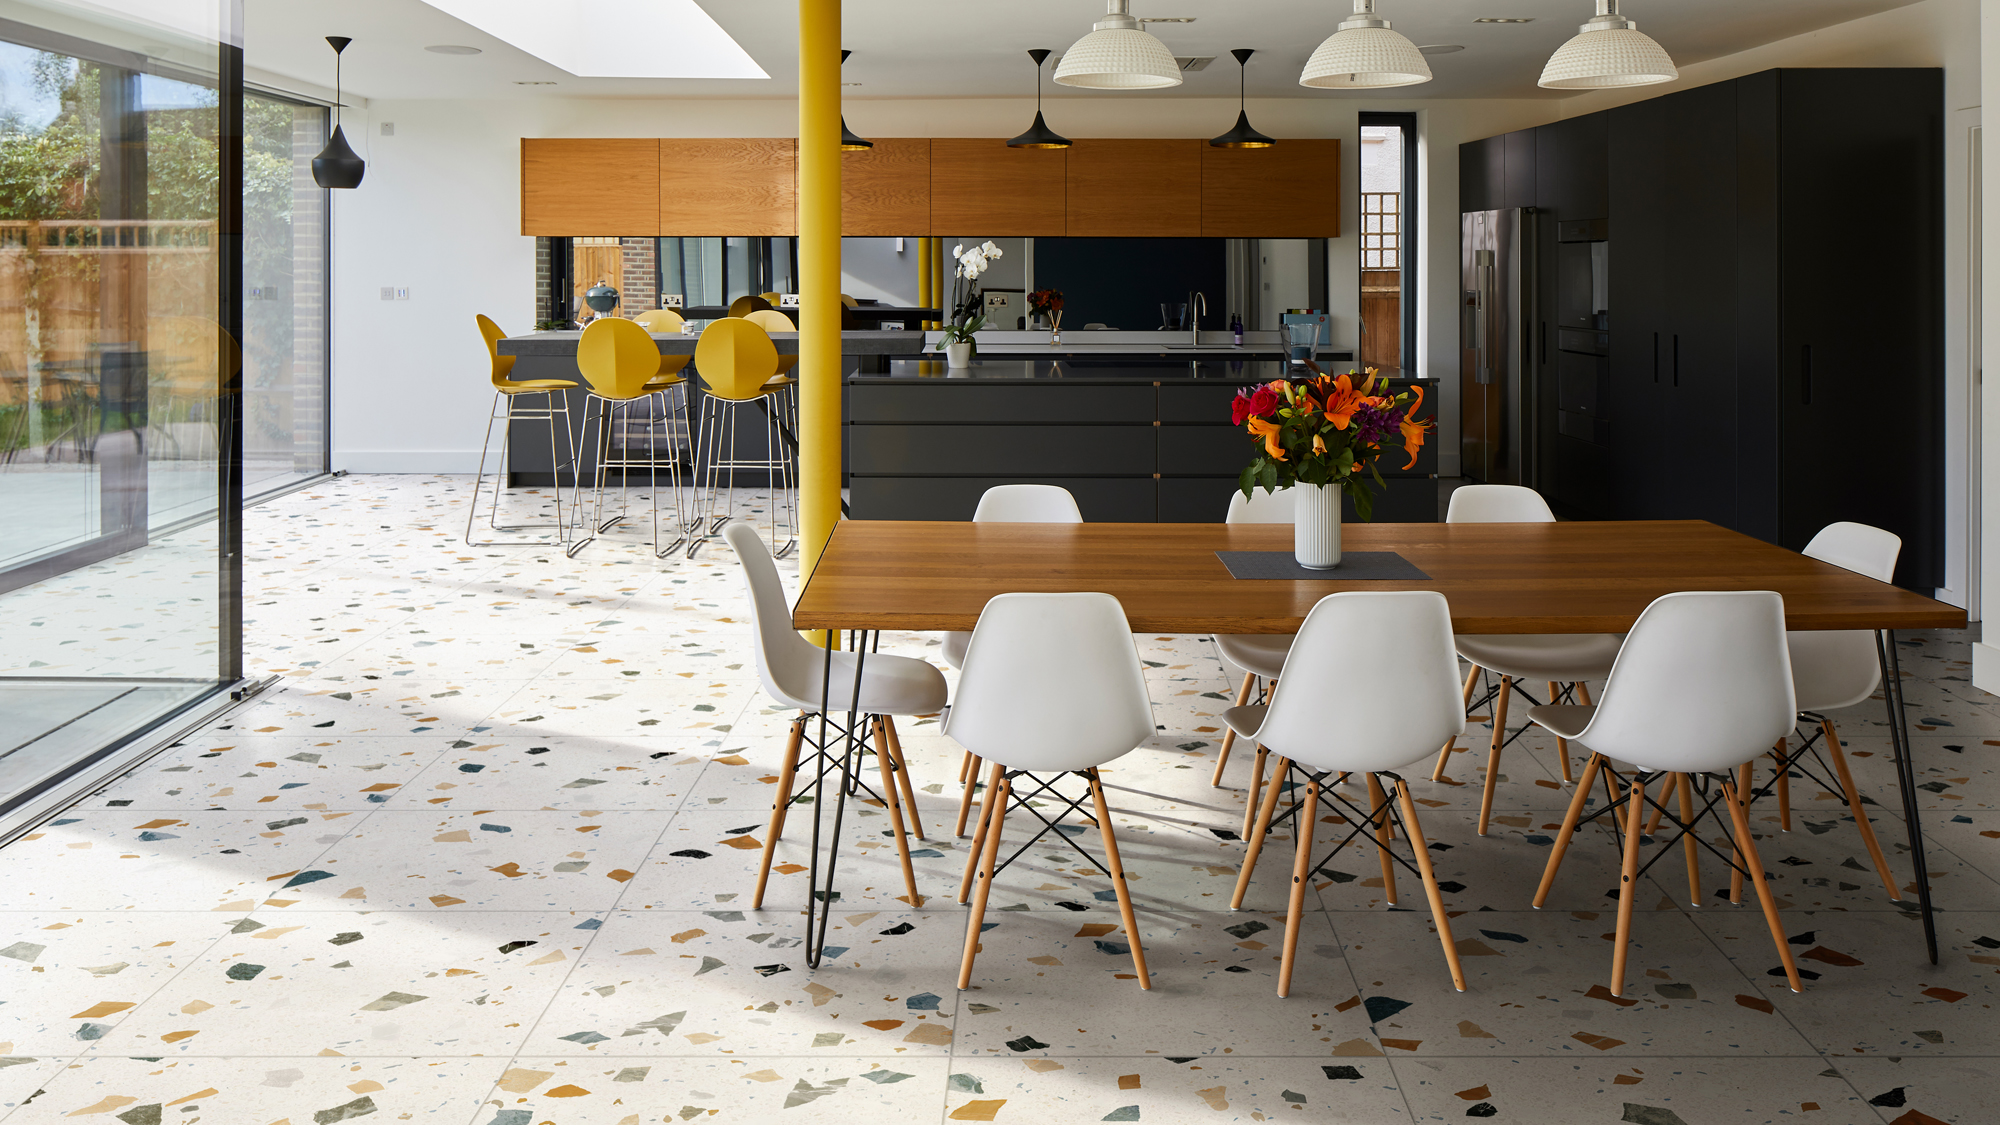 Kitchen Floor Tile Ideas 14 Durable, Ceramic Tile Designs For Kitchen Floors